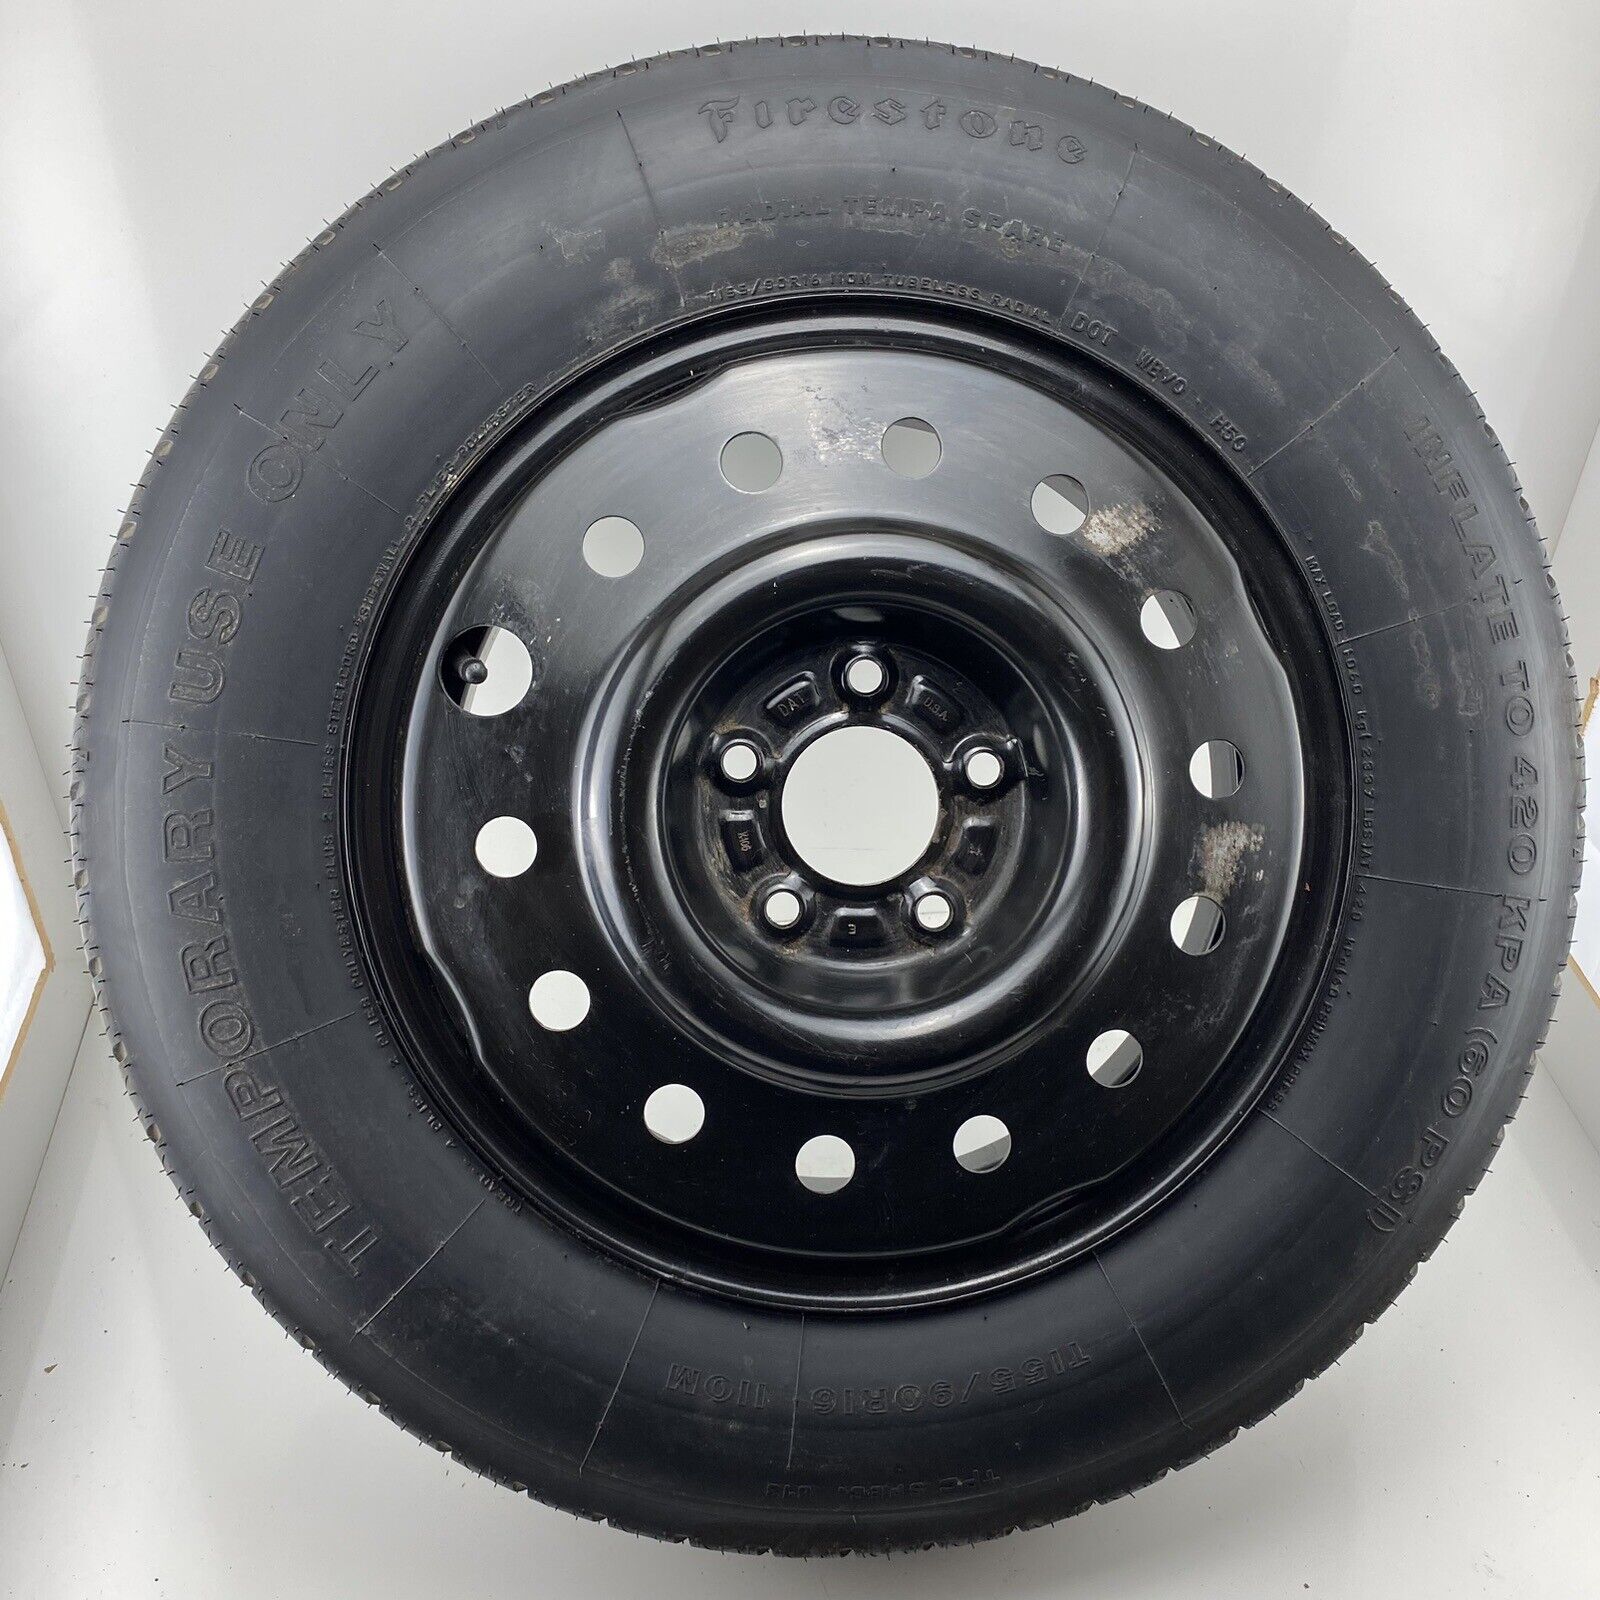 2002-2010 Saturn Vue Spare Tire Donut Emergency Compact Wheel Rim T155/90R16 OEM